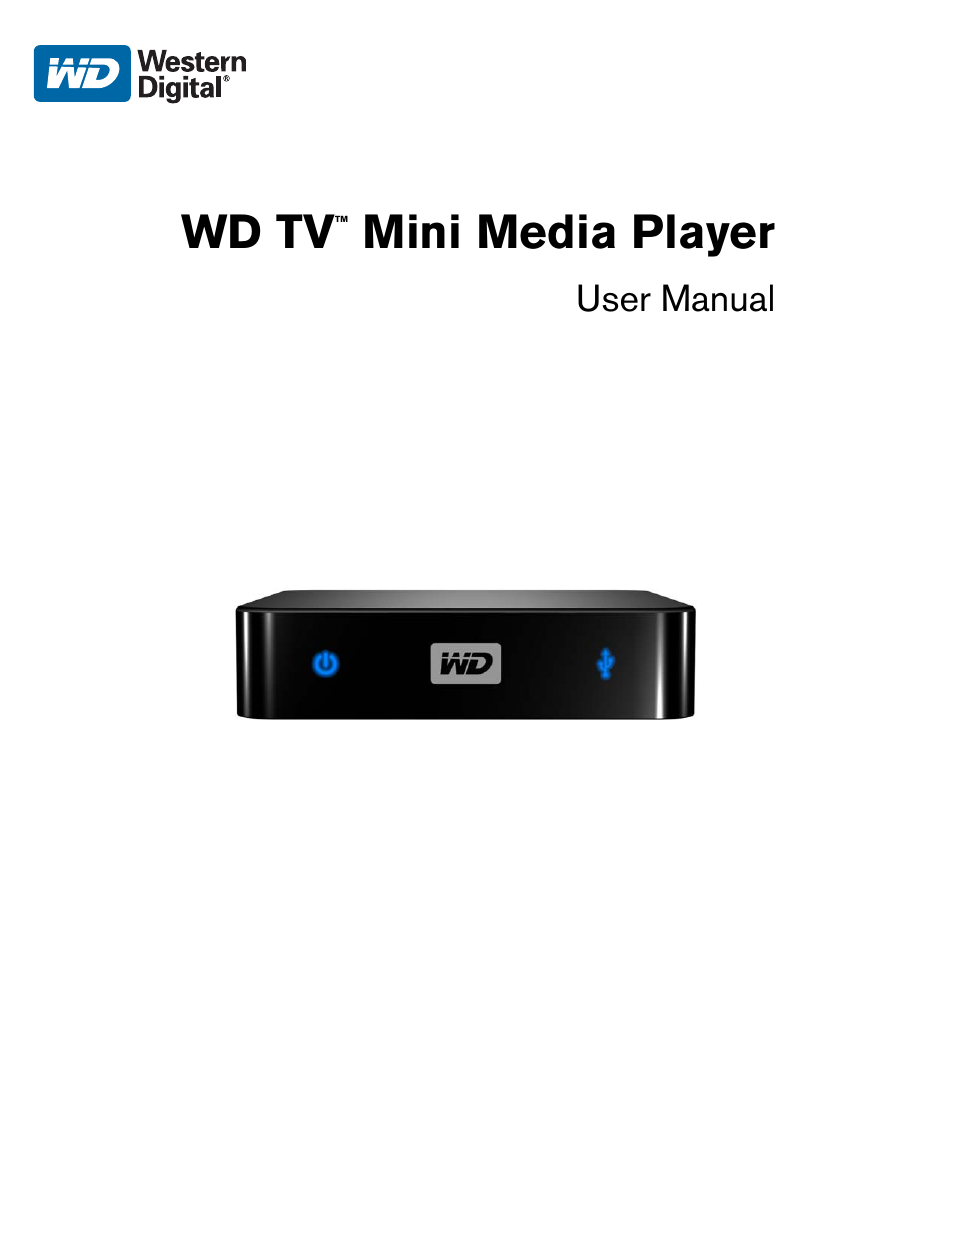 Western Digital WD TV Mini Media Player User Manual User Manual | 66 pages